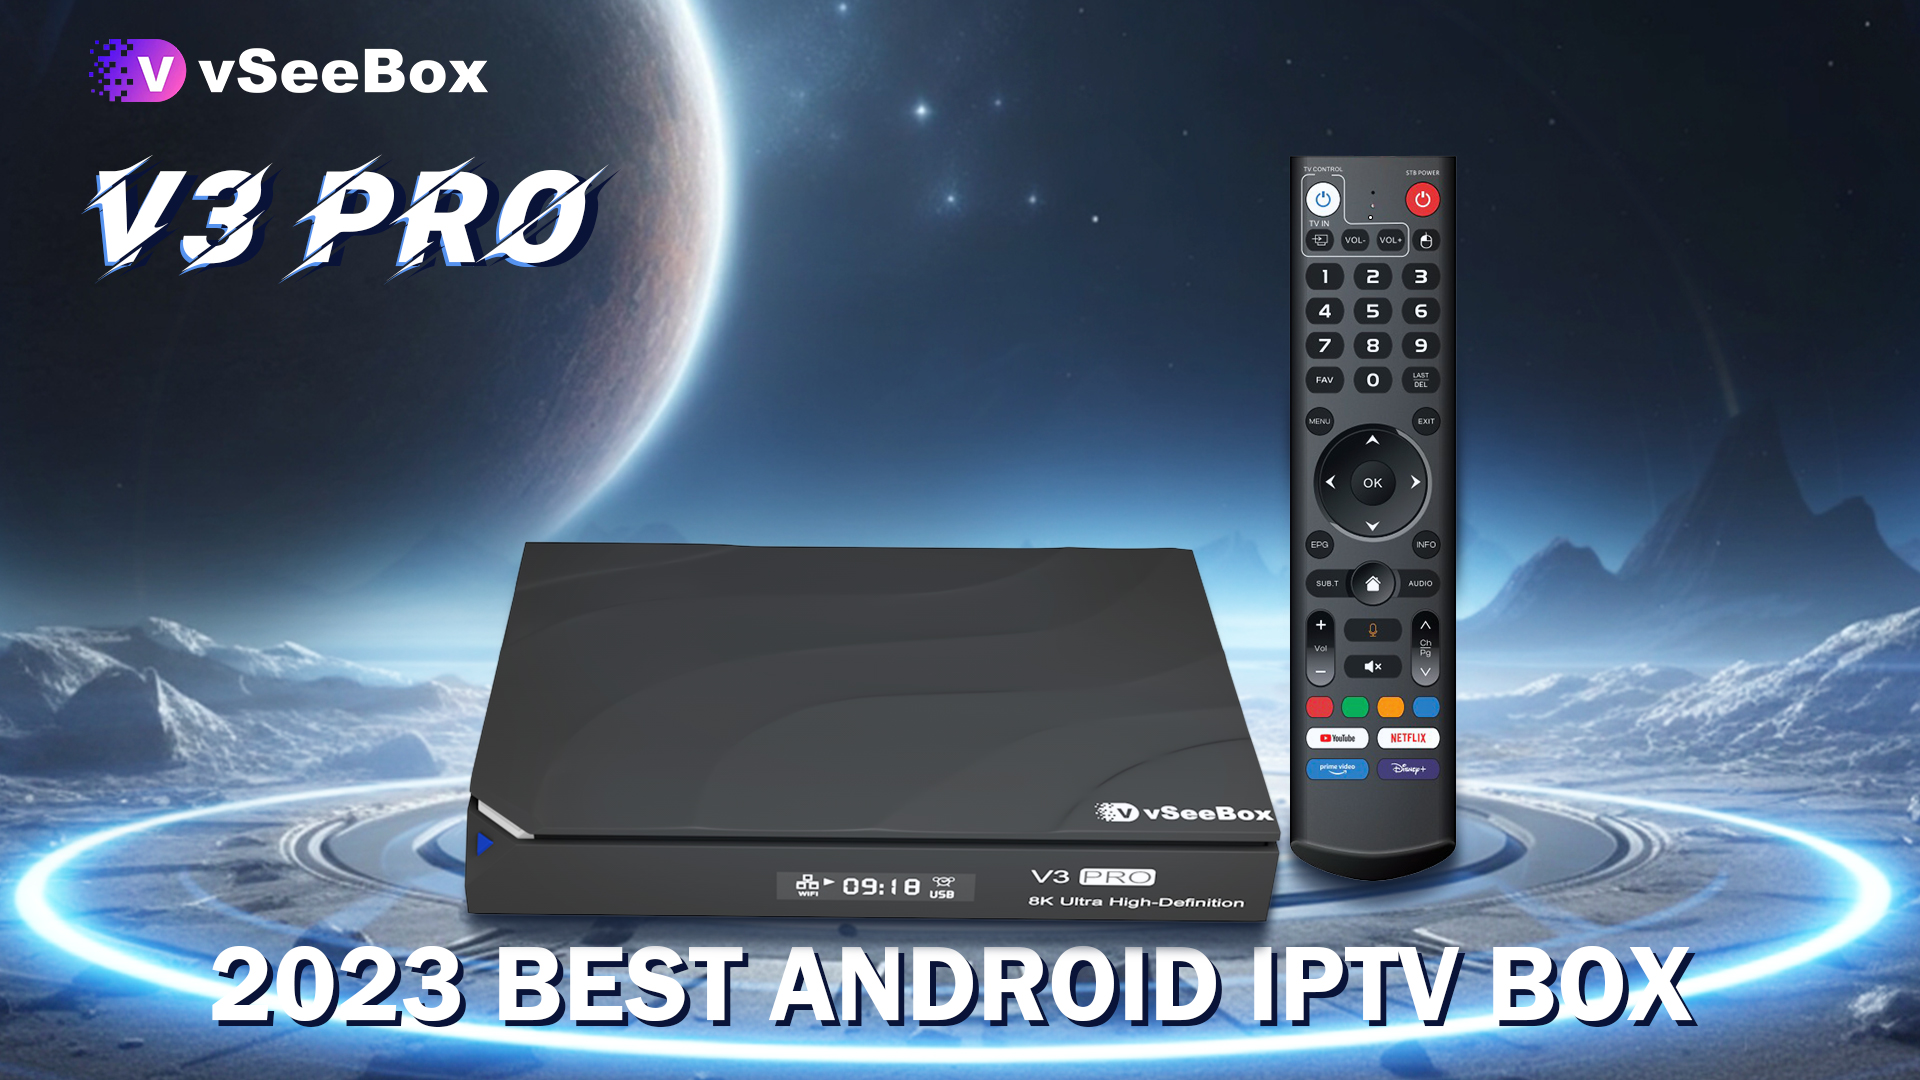 vSeeBox V3 Pro Best Android IPTV